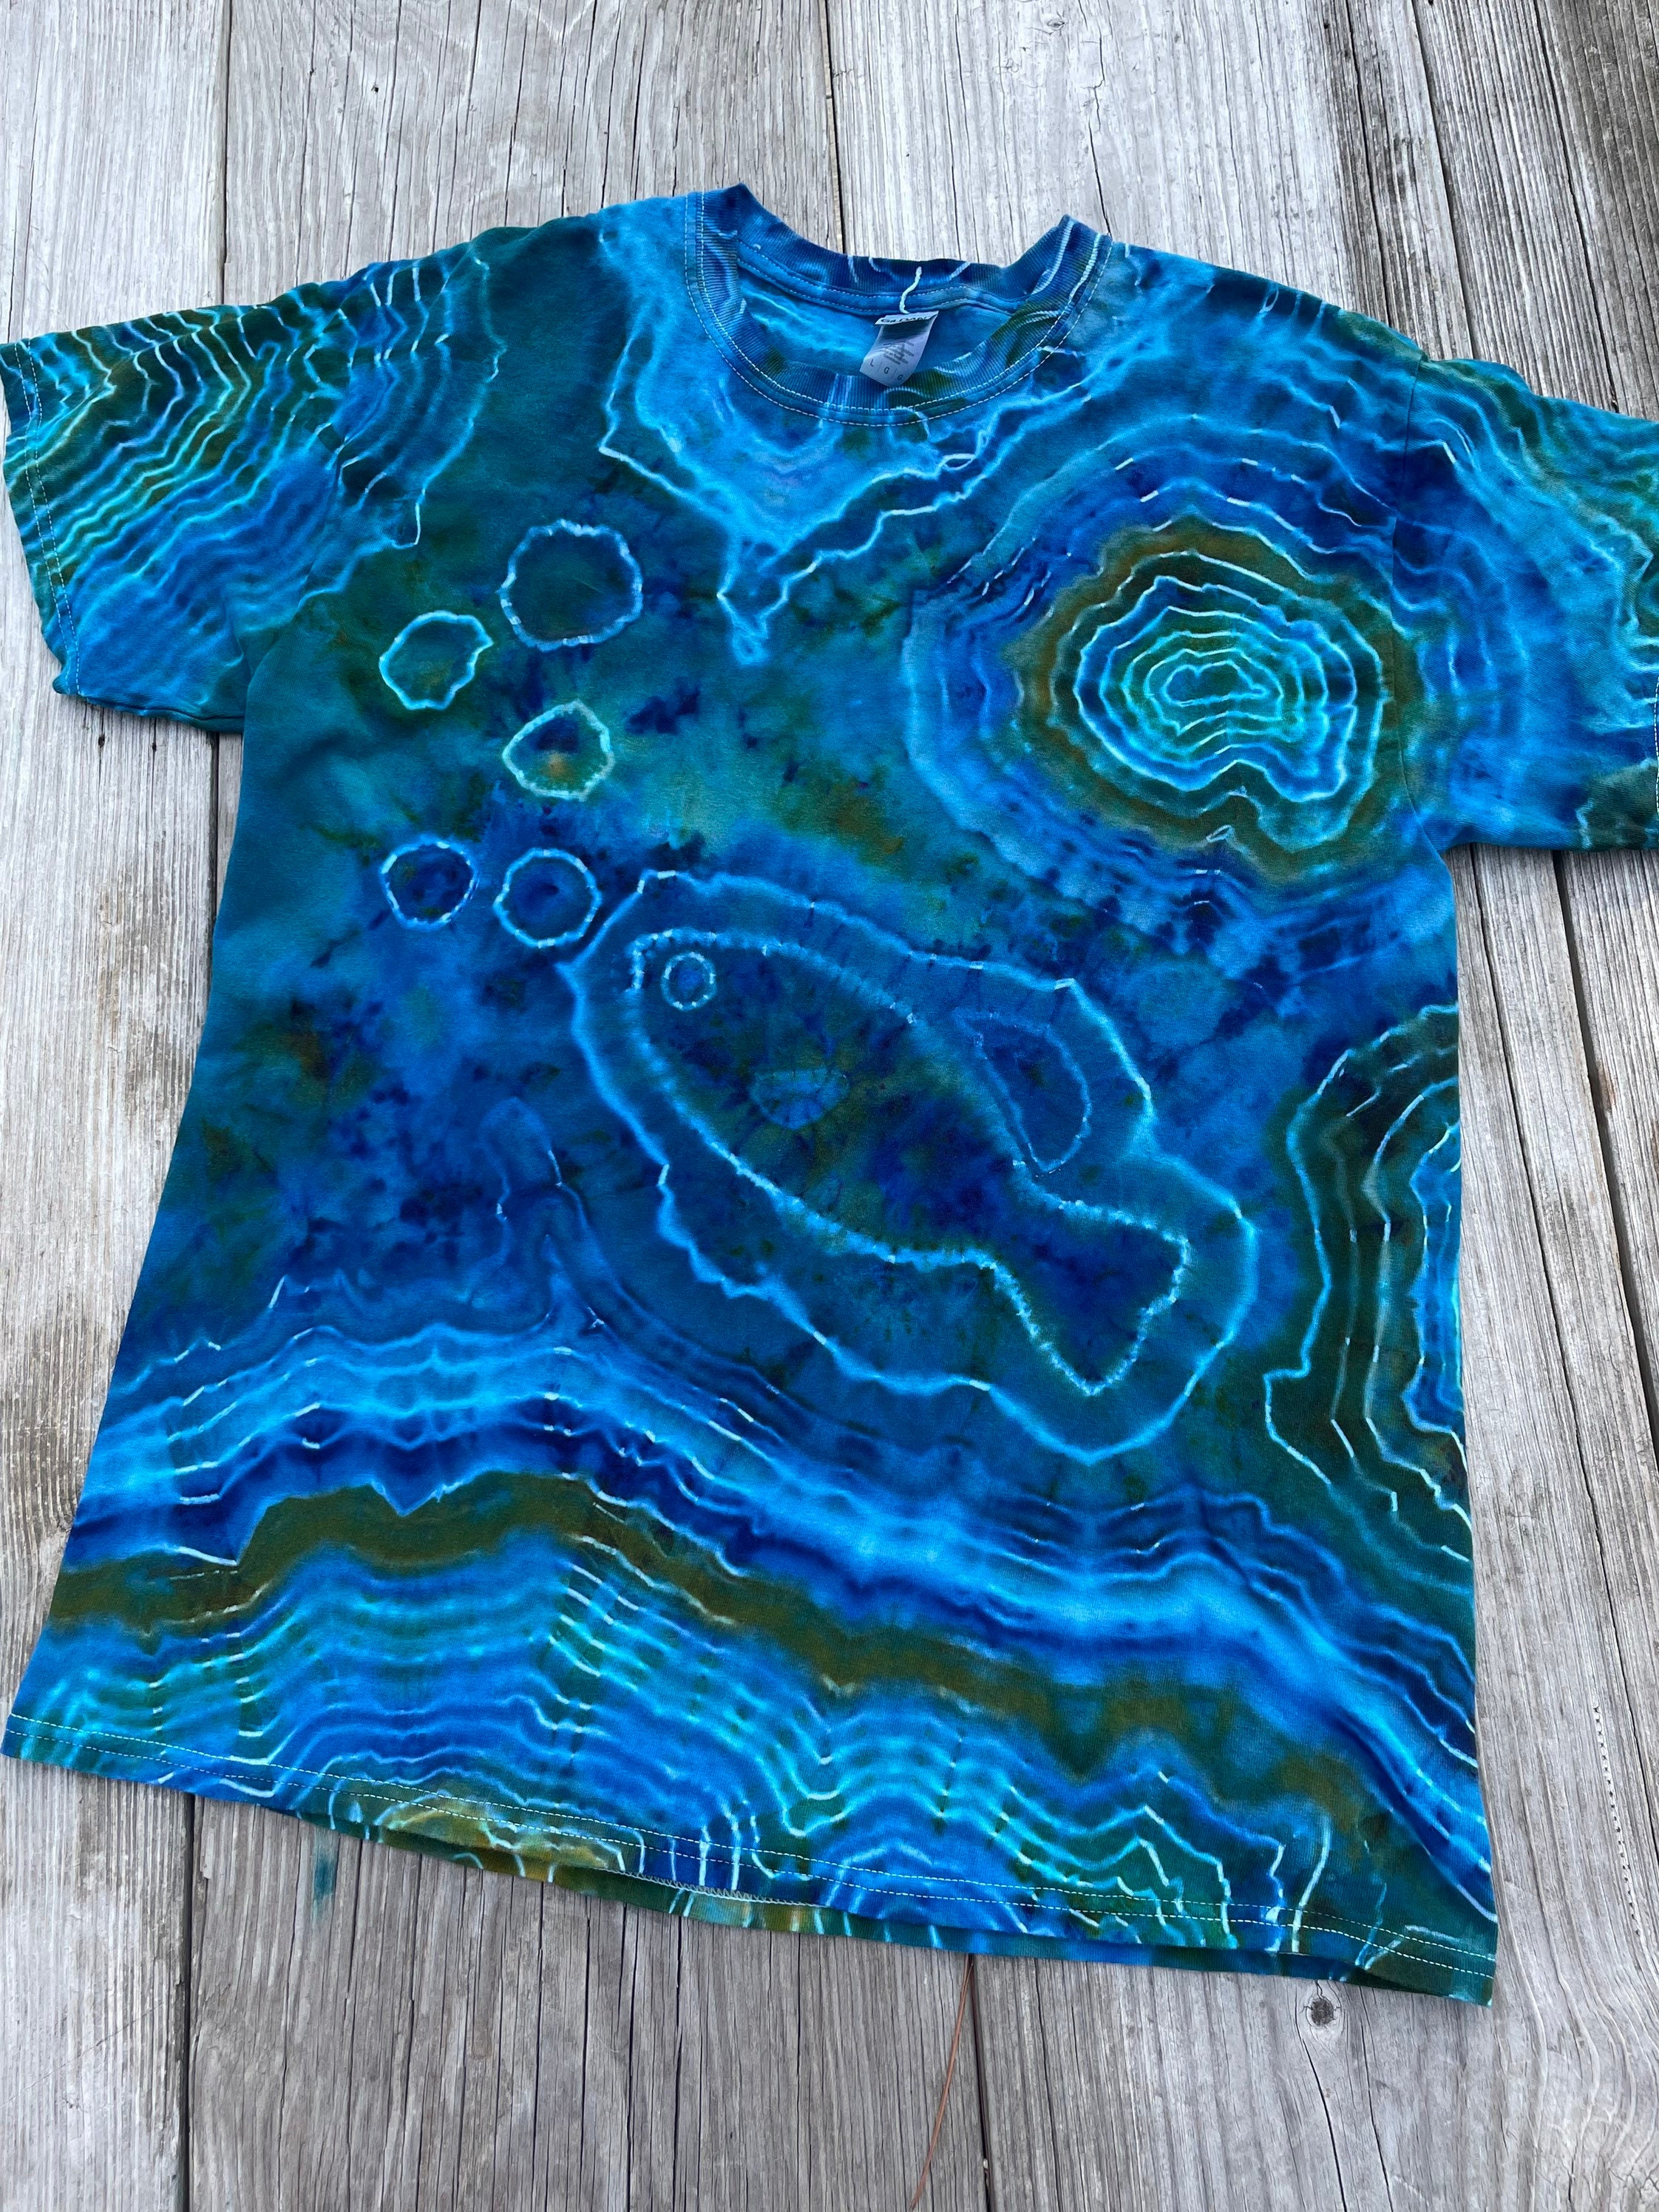 Gone Fishing Blues/brown/greens Geode Ice Dye Tie Dye Shirt 